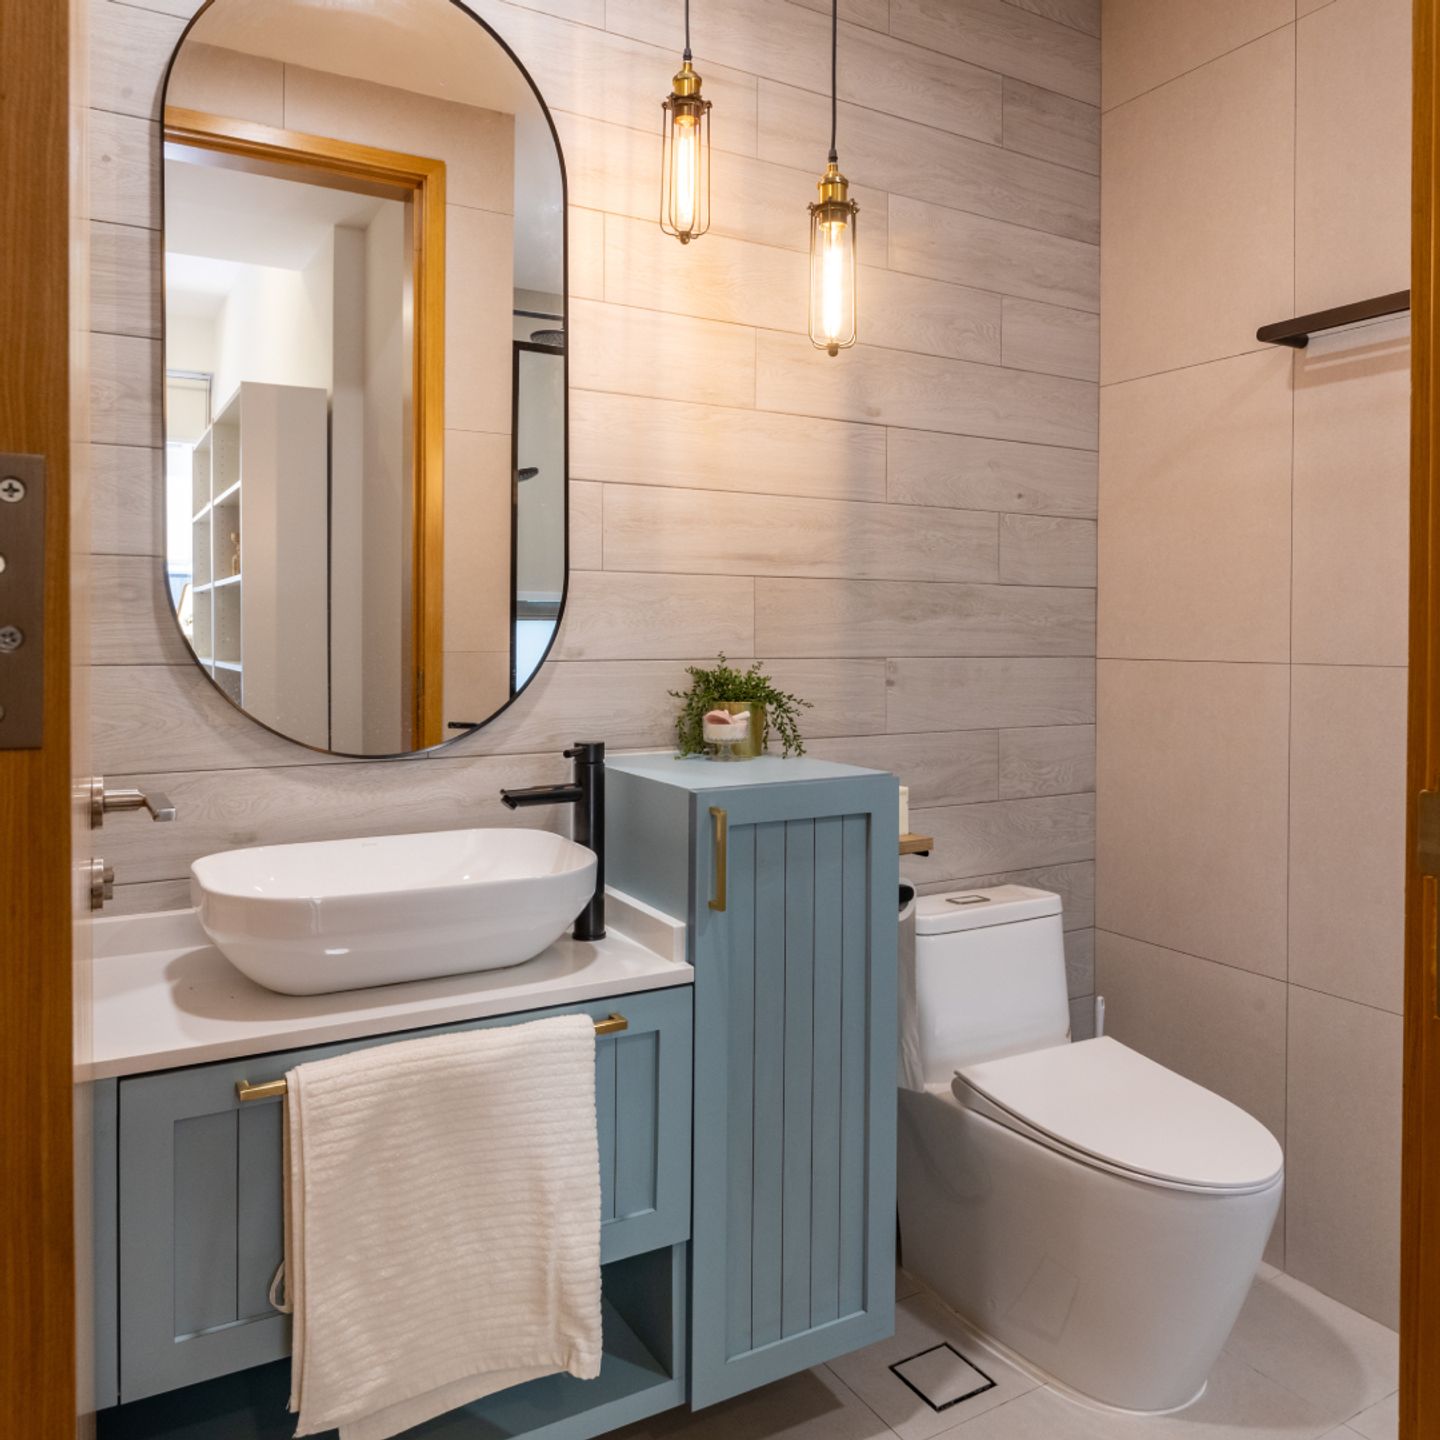 Scandinavian Design For Small Bathrooms - Livspace